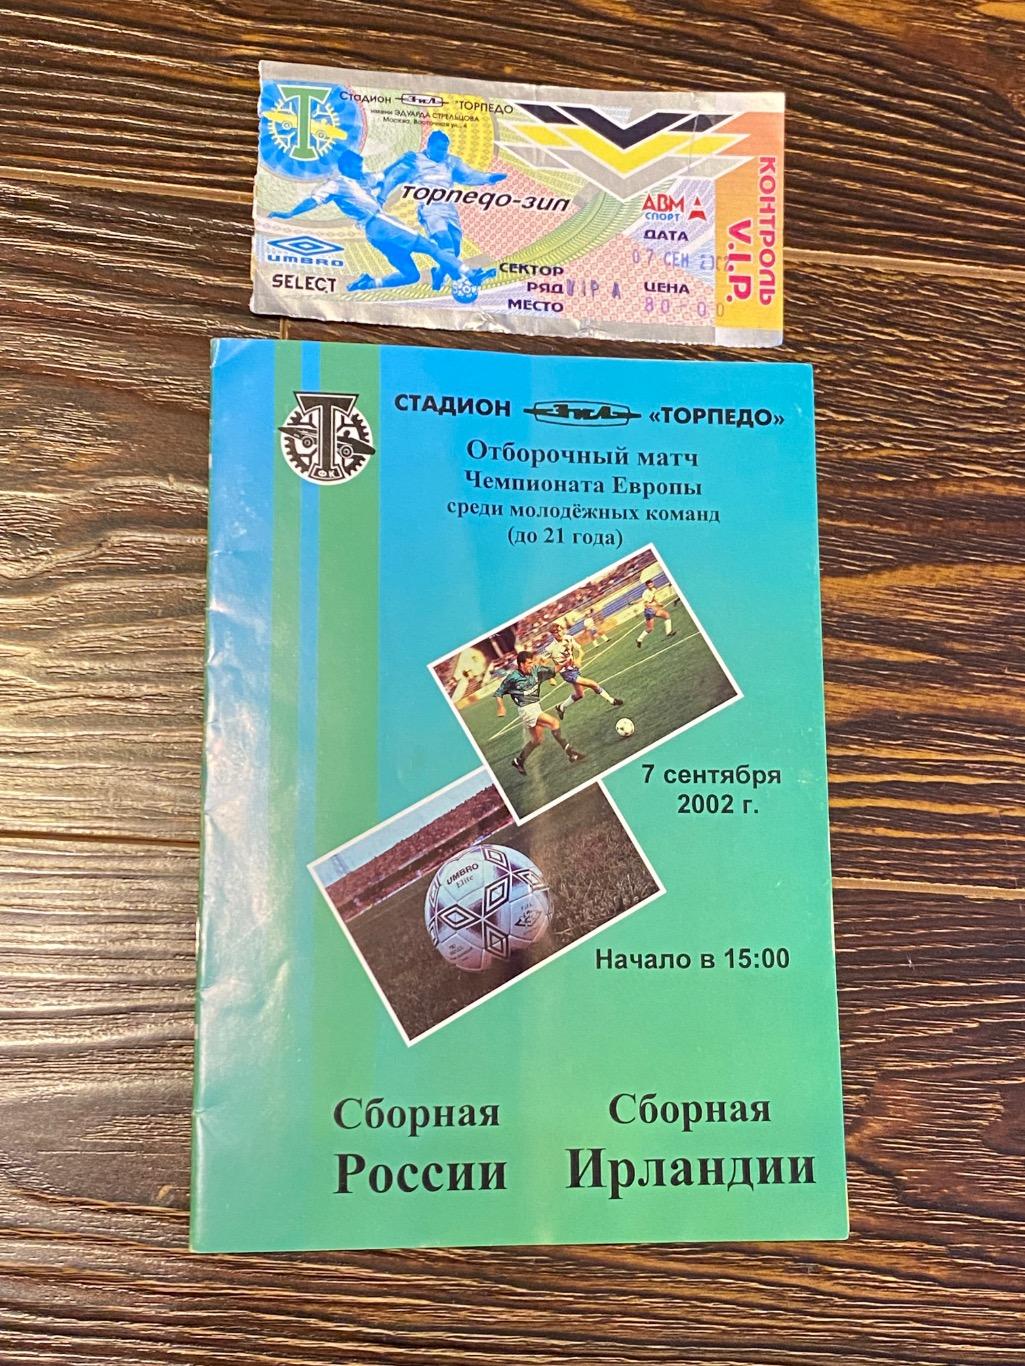 U-21/ Россия - Ирландия 07.09.2002. Программа с билетом. стадион ТОРПЕДО